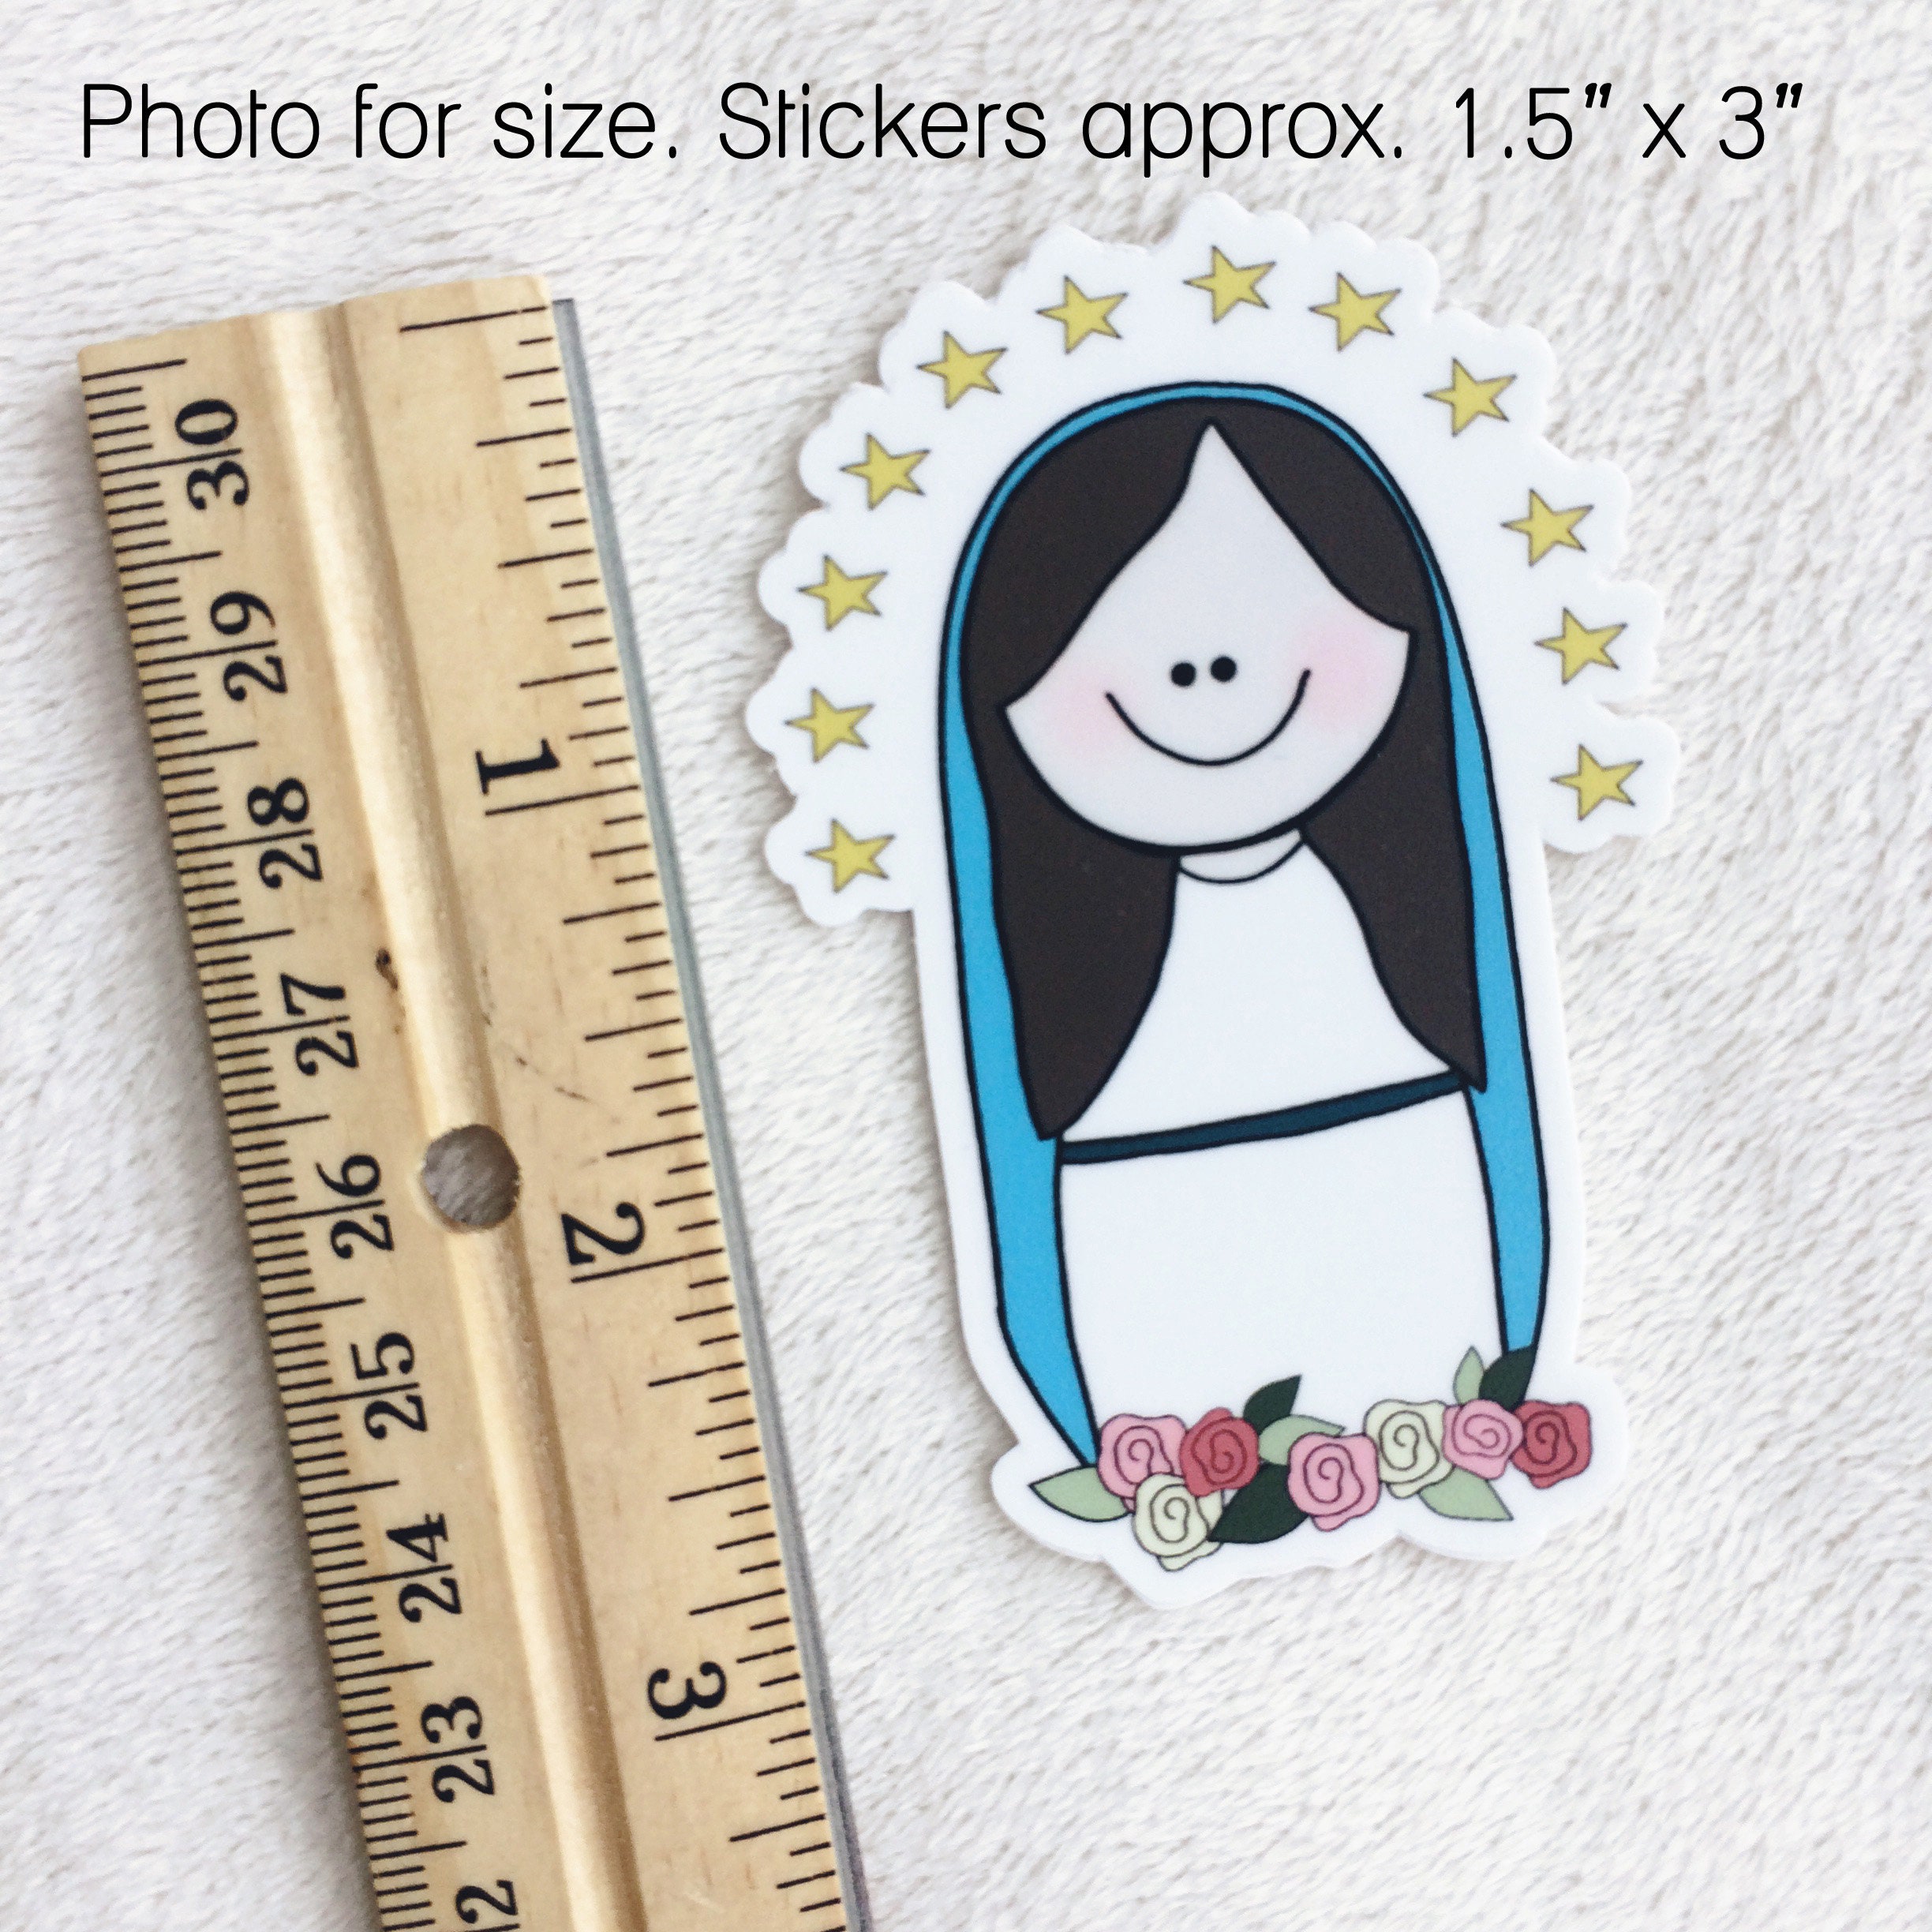 Catholic Mom - Catholic - Sticker sold by Zhao na